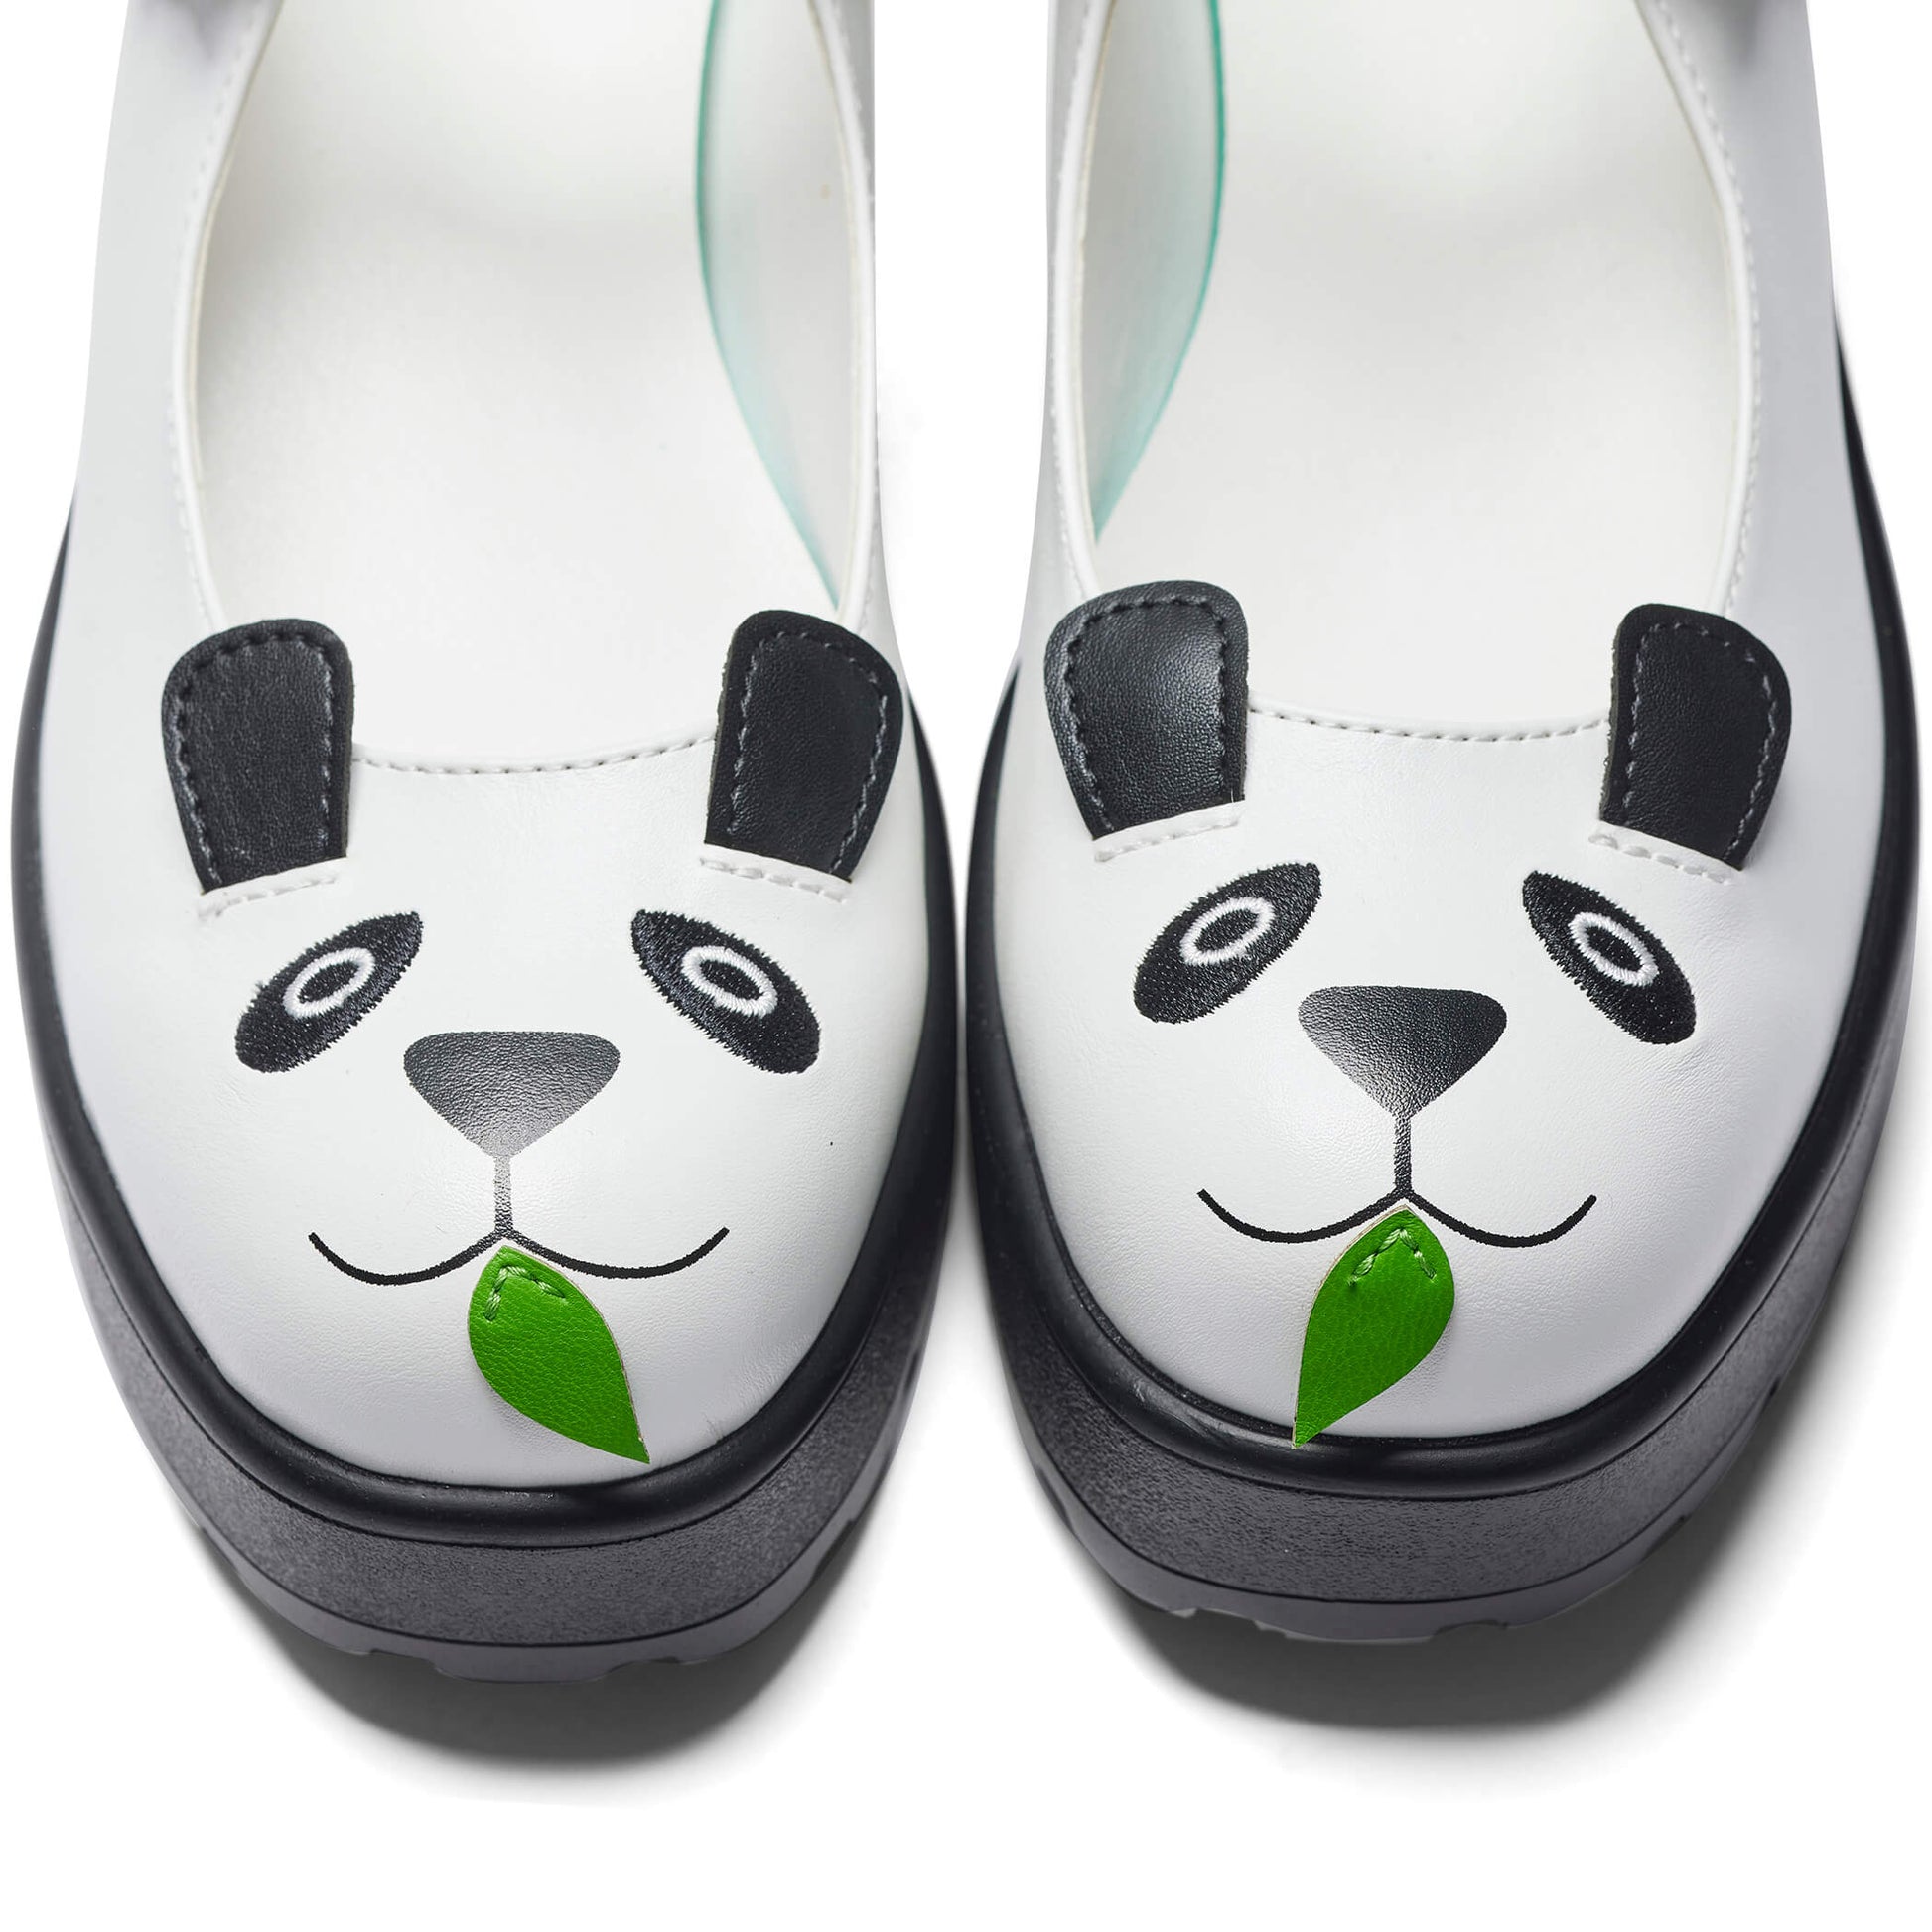 Tira Mary Jane Shoes 'Pondering Panda Edition' - Black & White - KOI Footwear - Top Front Details